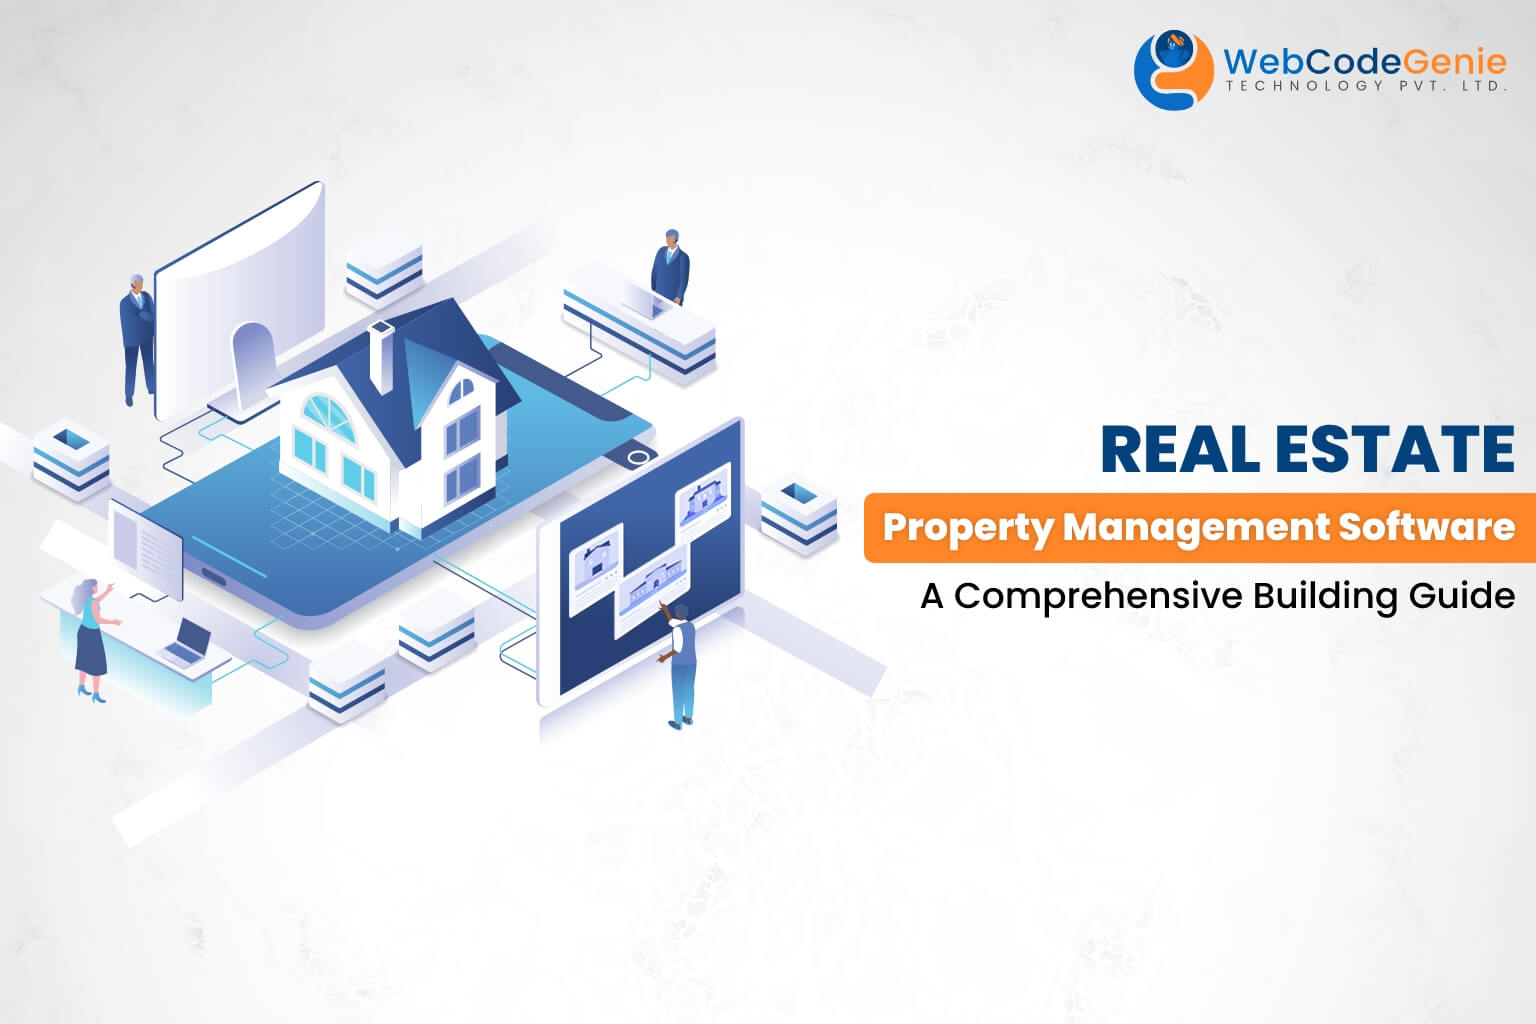 Real Estate Property Management Software A Comprehensive Building Guide